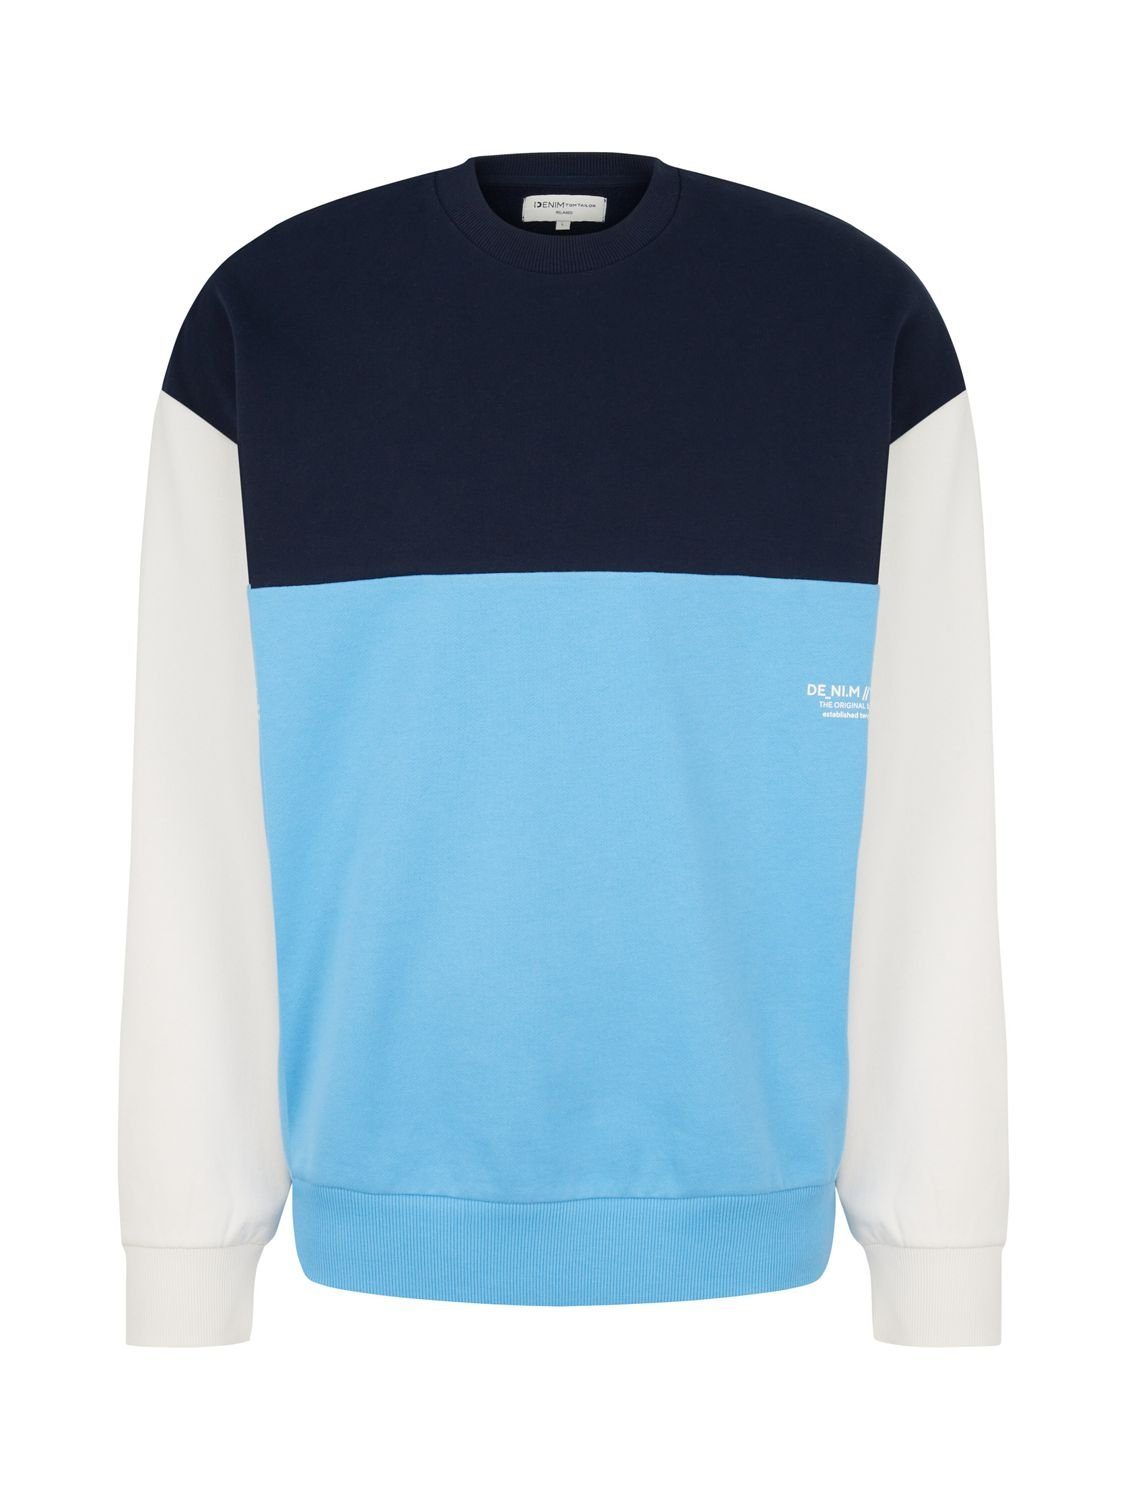 TOM TAILOR Denim 18395 Sky Sweatshirt Blue Rainy Baumwolle COLORBLOCK aus